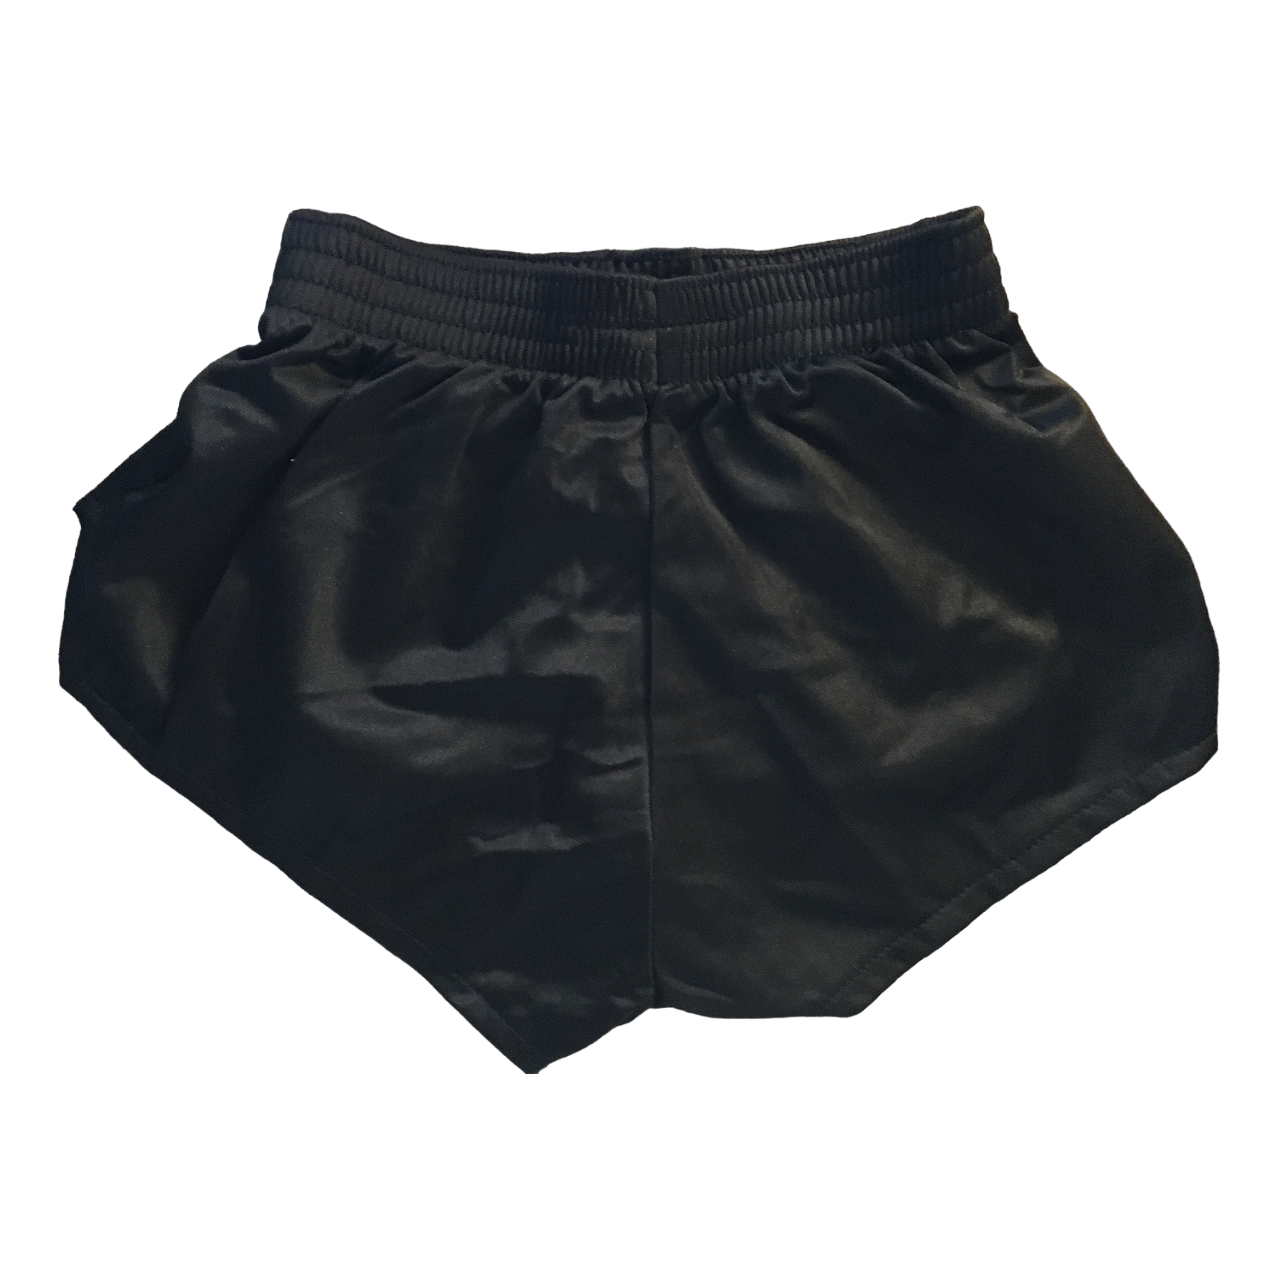 Hooters New Women's Black Original Style Shorts by Jensen 2XS